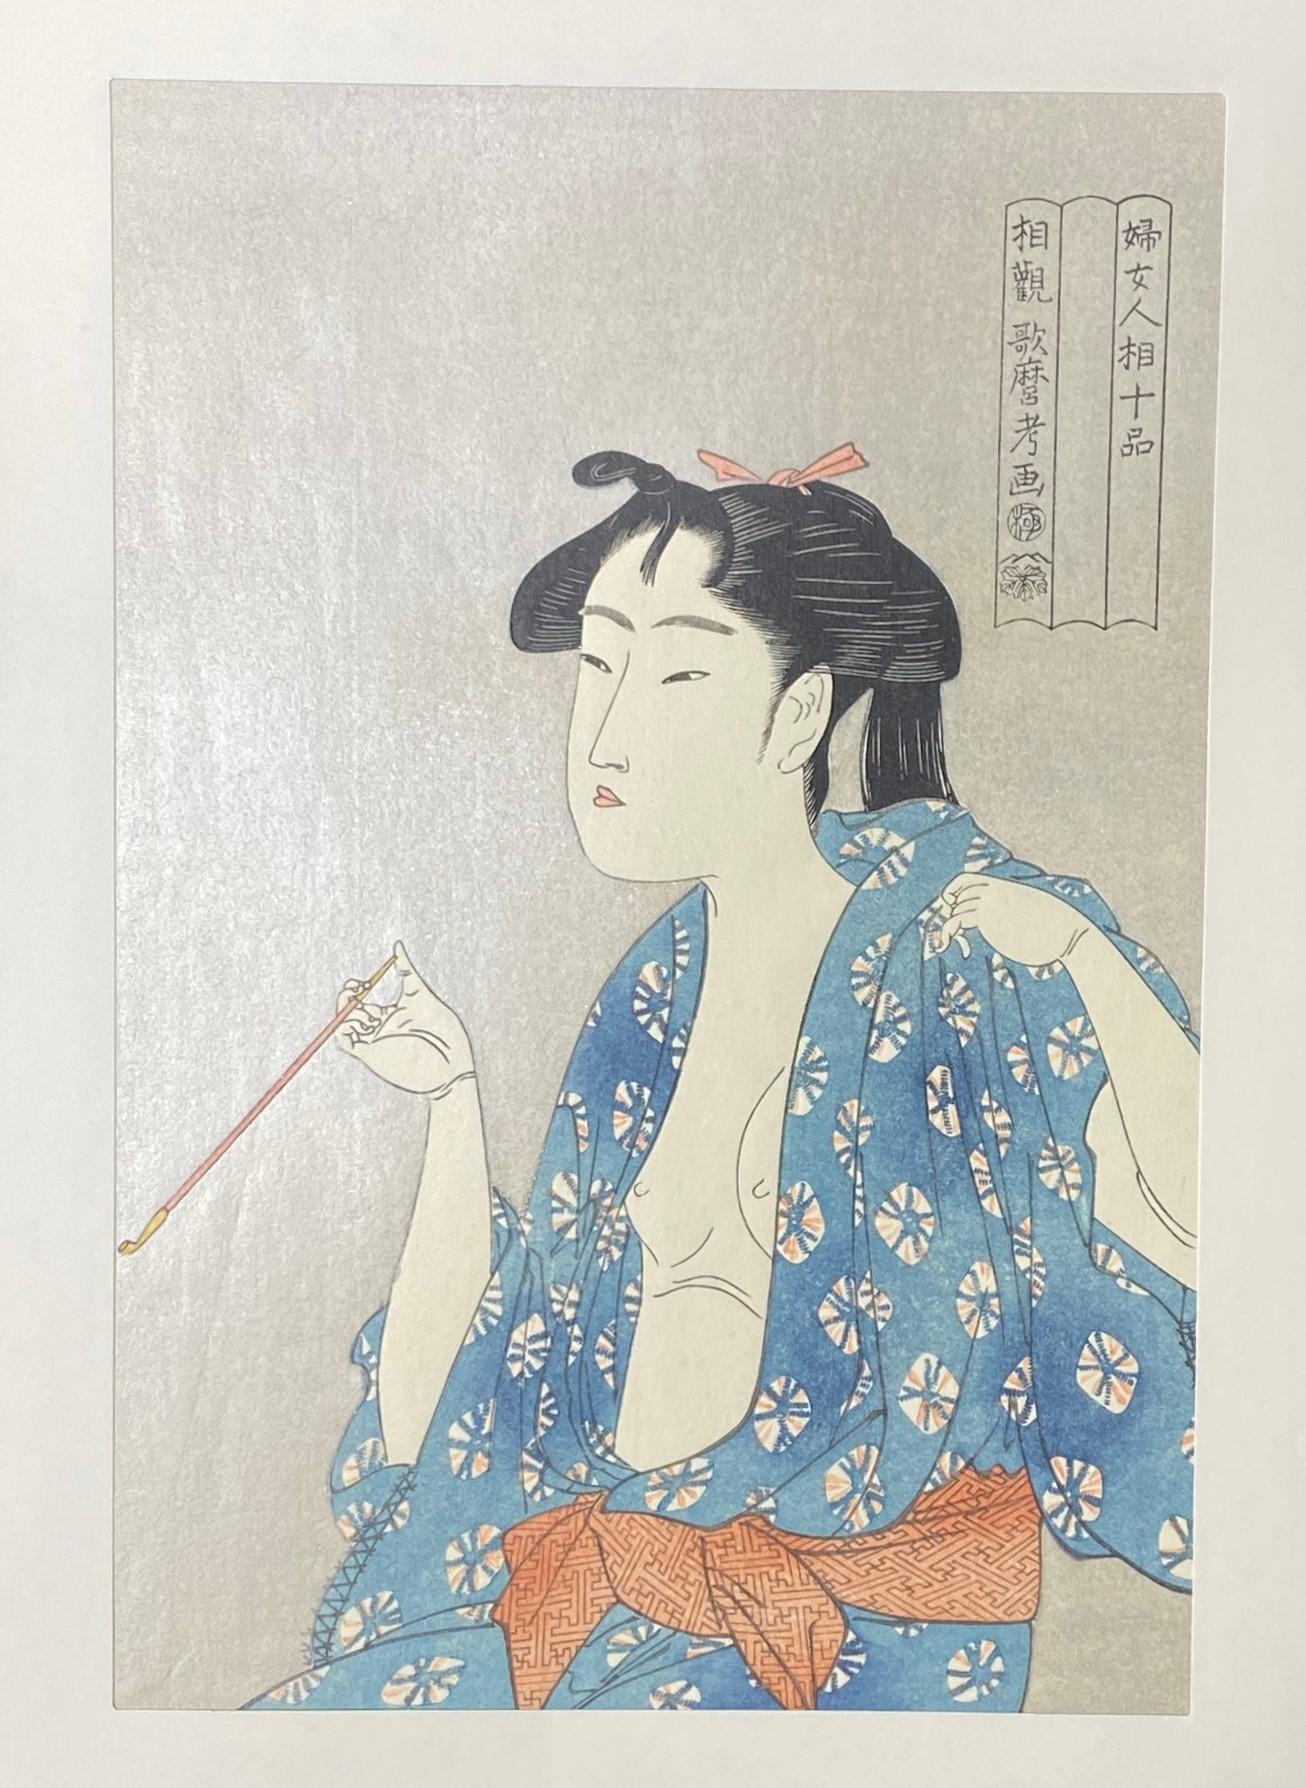 Showa Kitagawa Utamaro Japanese Woodblock Print Edo Semi-Nude Woman Smoking Opium Pipe For Sale